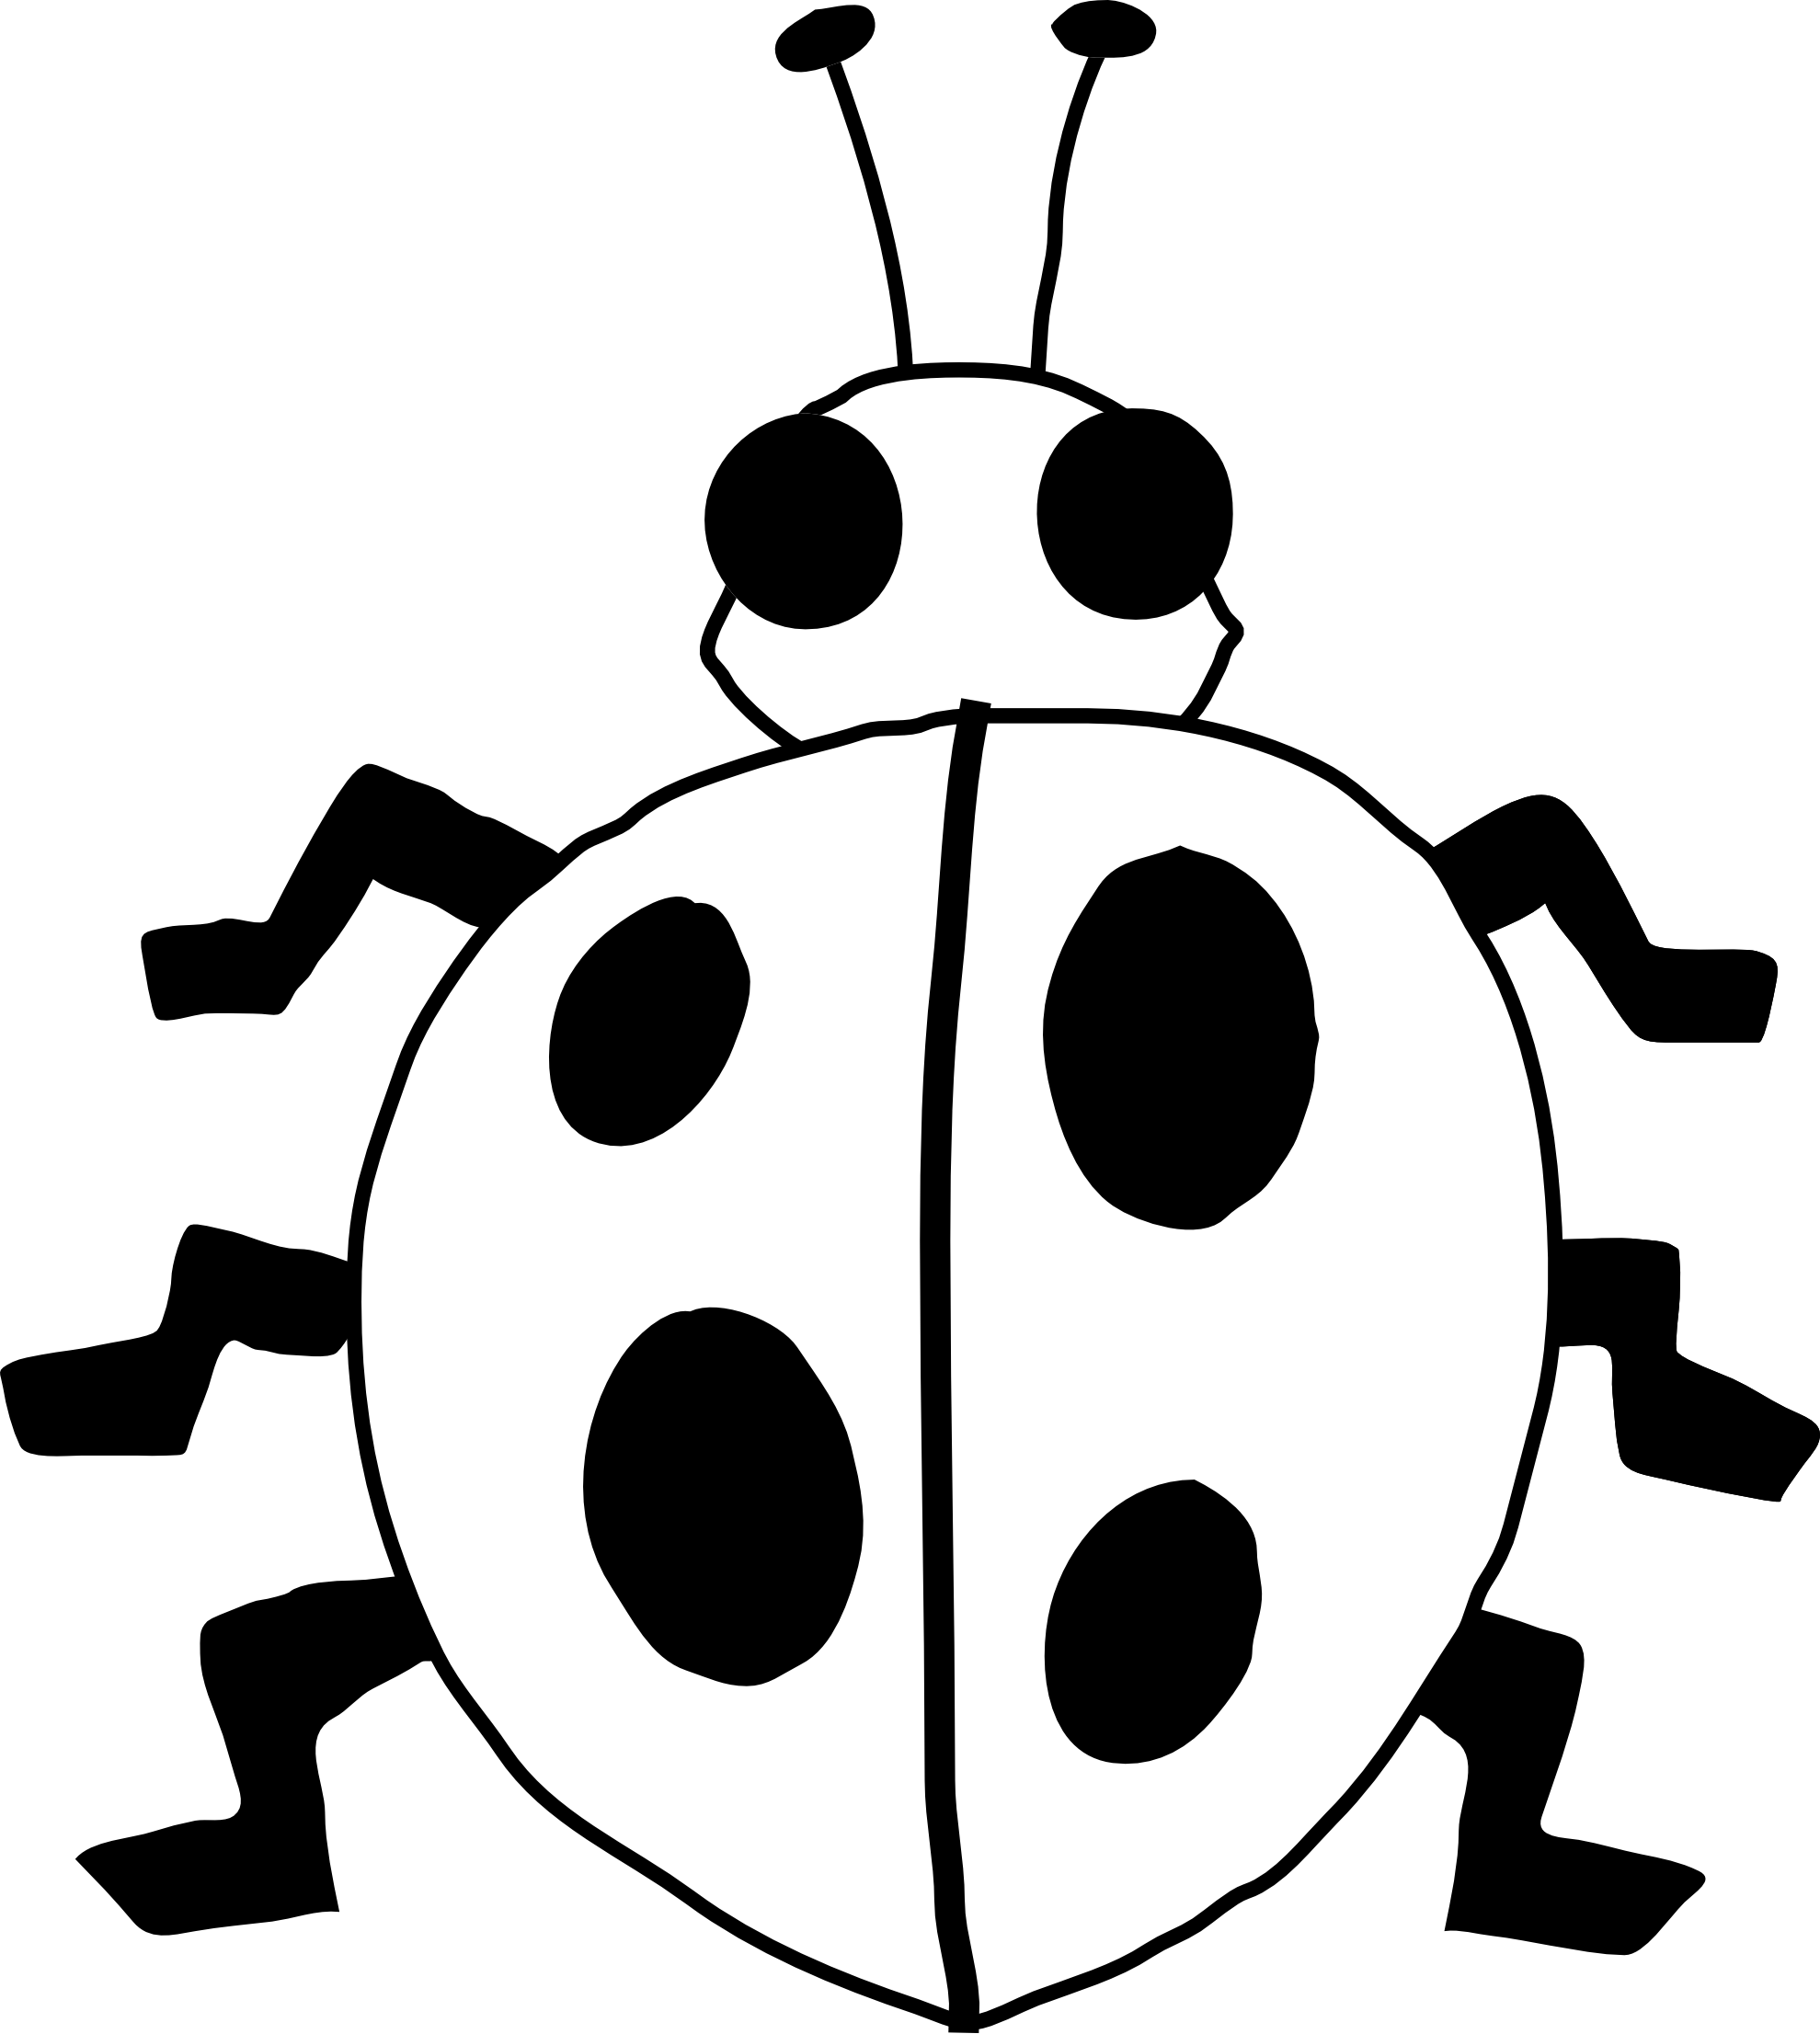 ladybug 21 black white line art flower scalable vector graphics ...